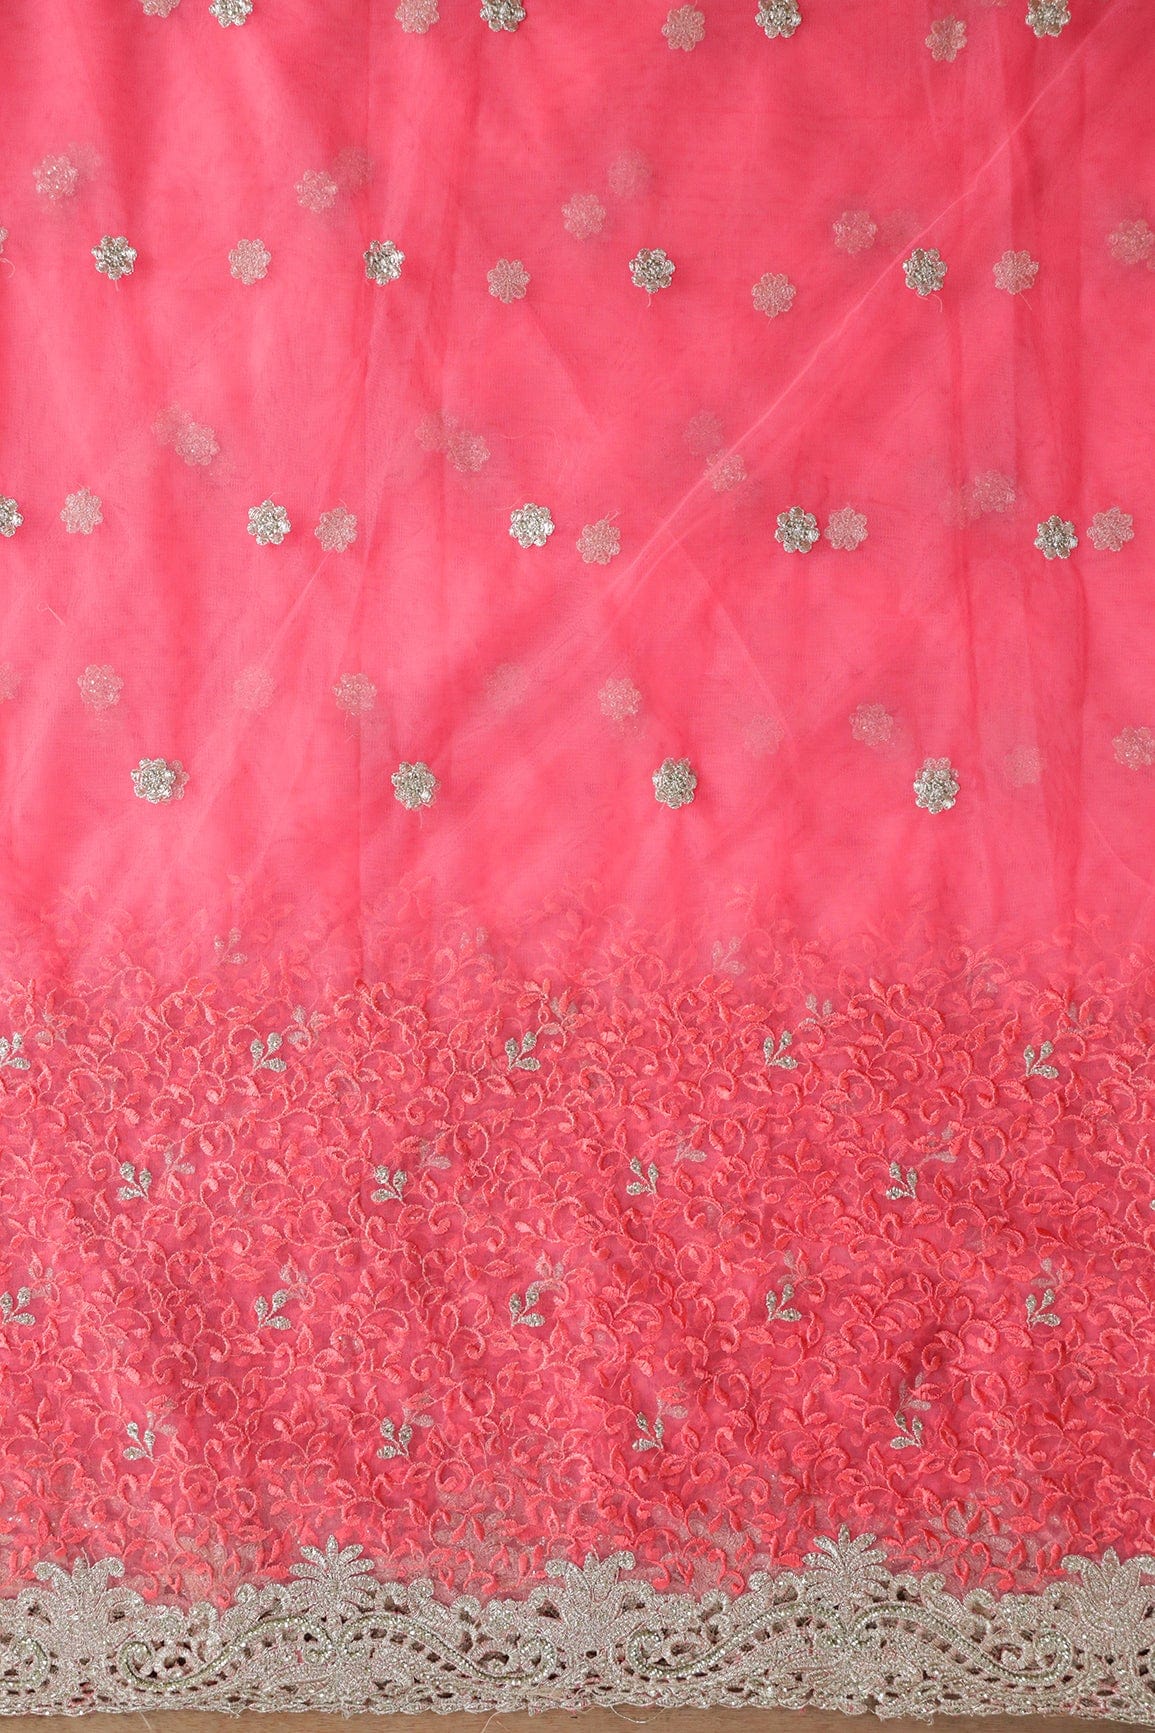 doeraa Embroidery Fabrics Big Width''56'' Gajri Pink Thread With Zari Leafy Embroidery Work On Gajri Pink Soft Net Fabric With Border